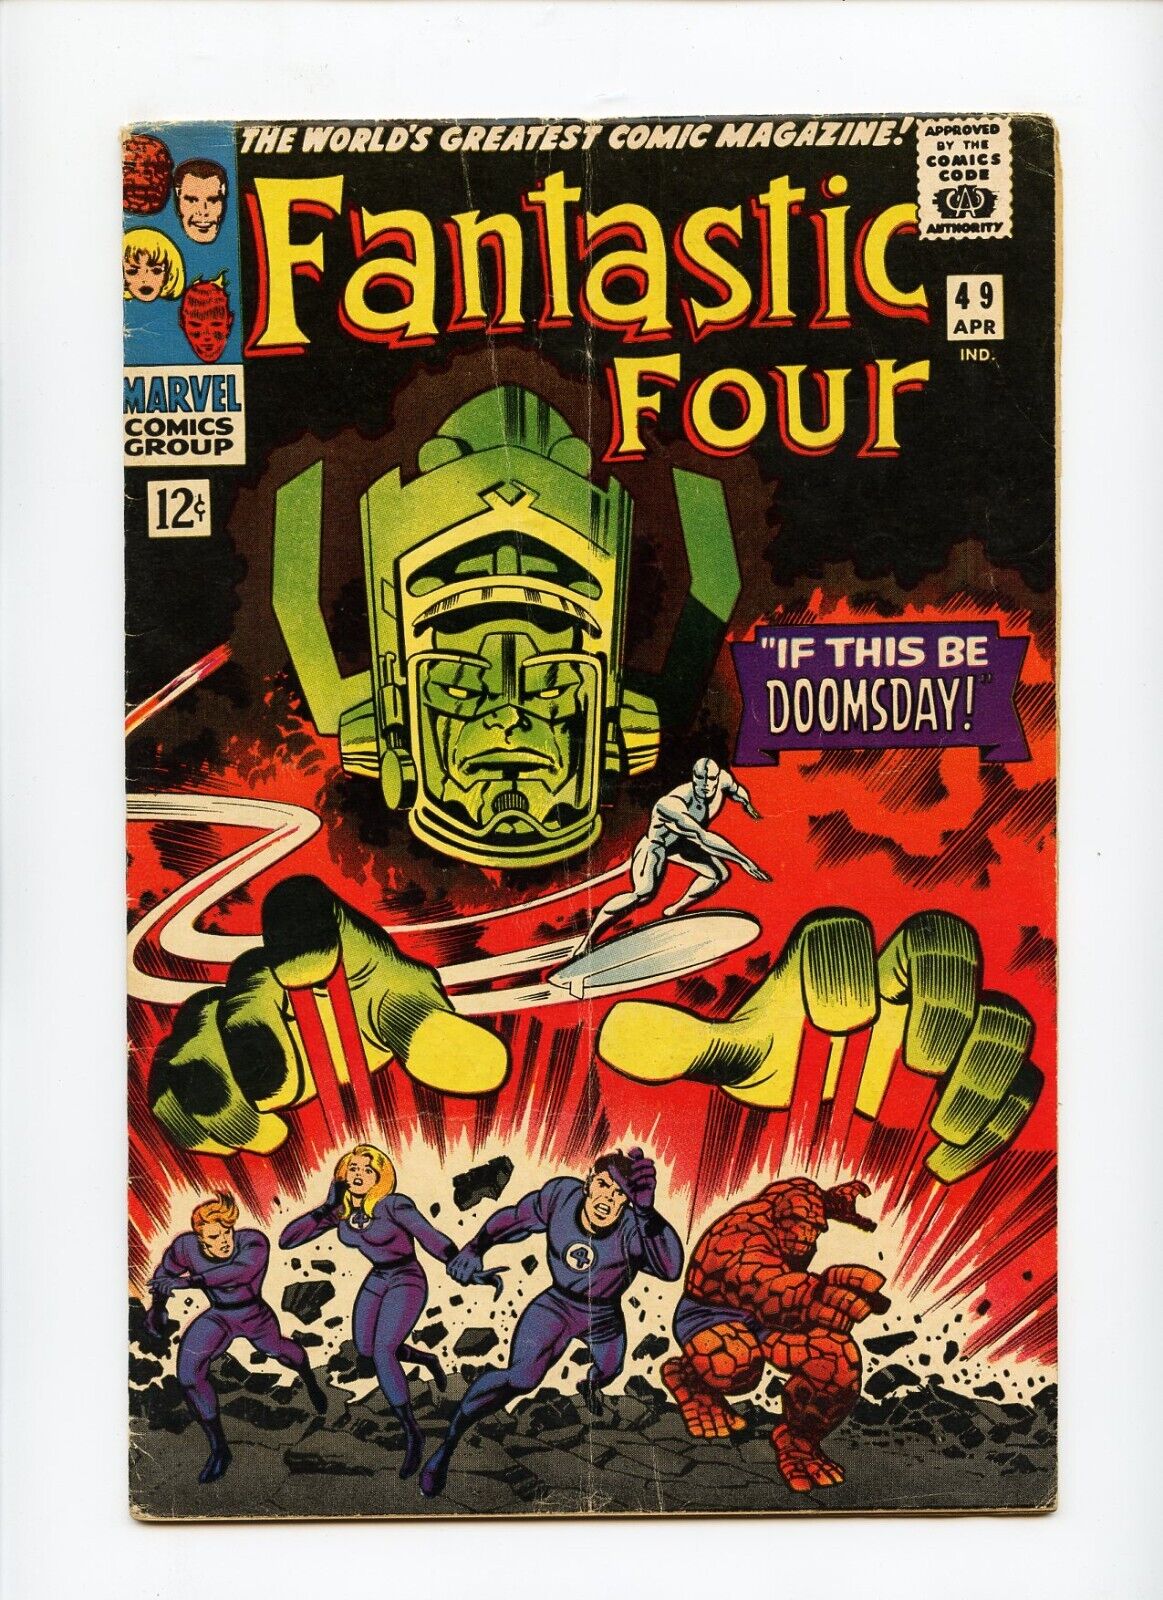 Fantastic Four #49 Marvel Comics Production Defect